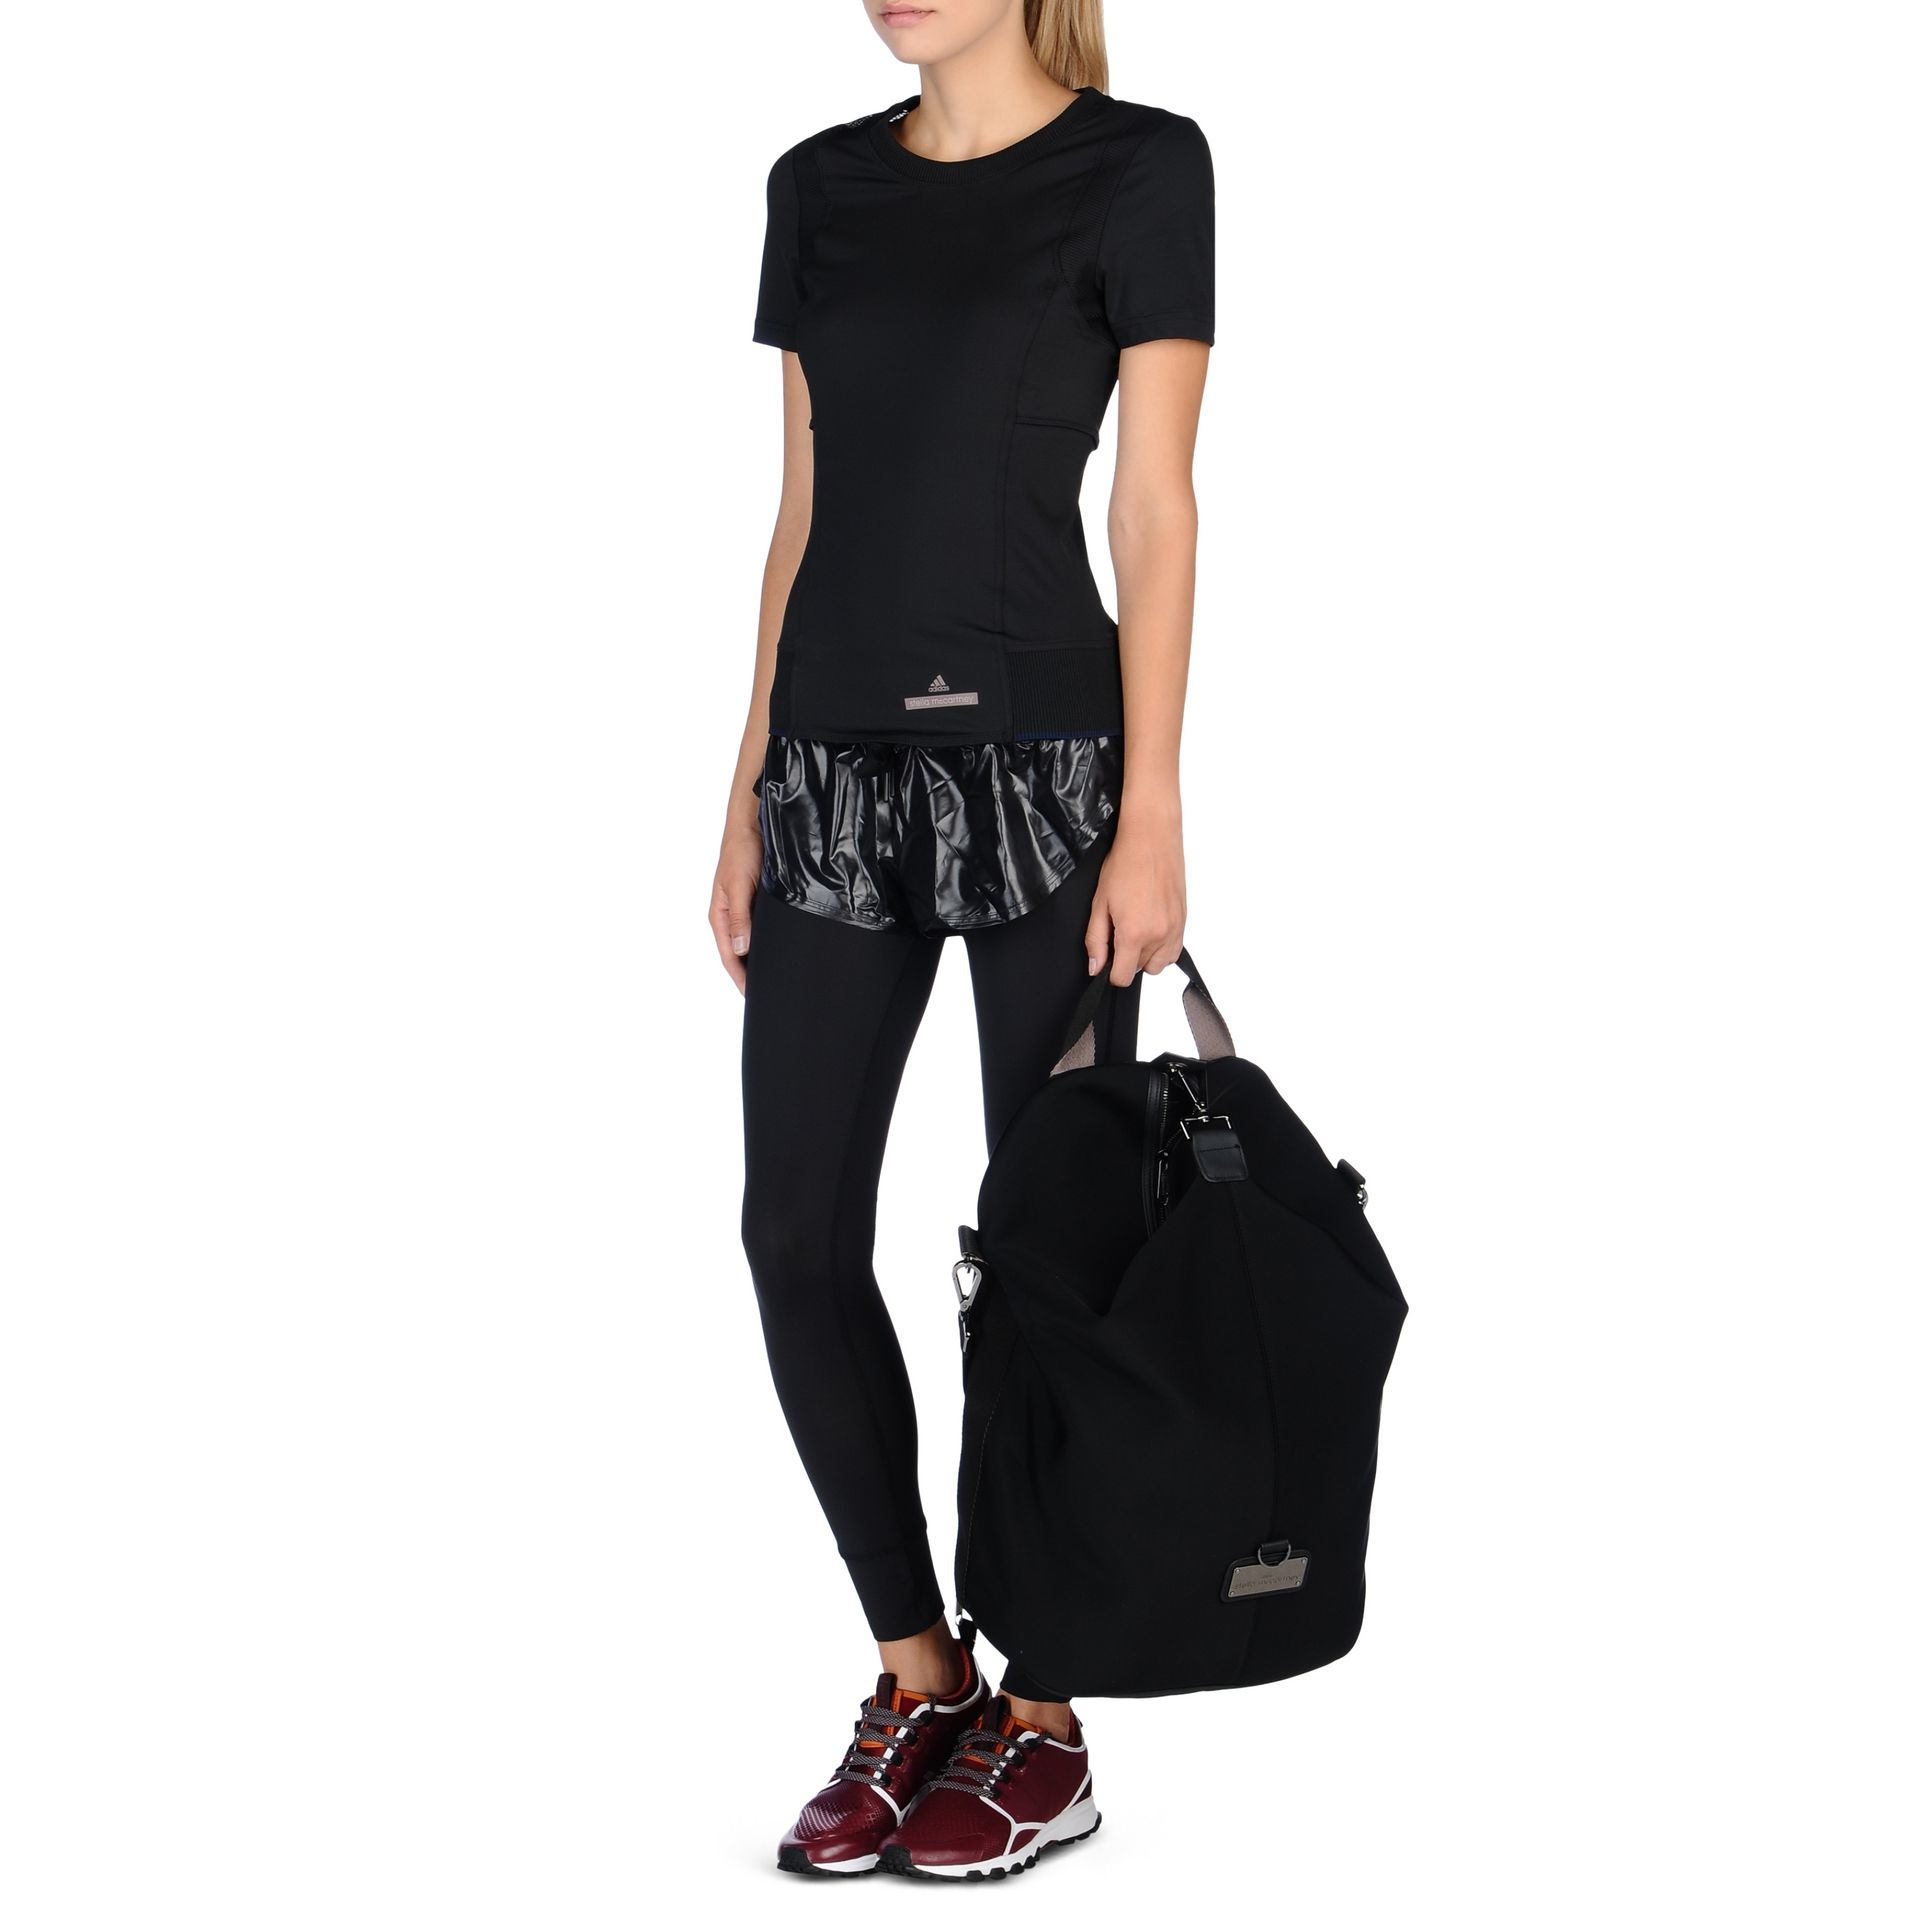 Lyst - Adidas By Stella Mccartney Studio Neoprene Backpack in Black